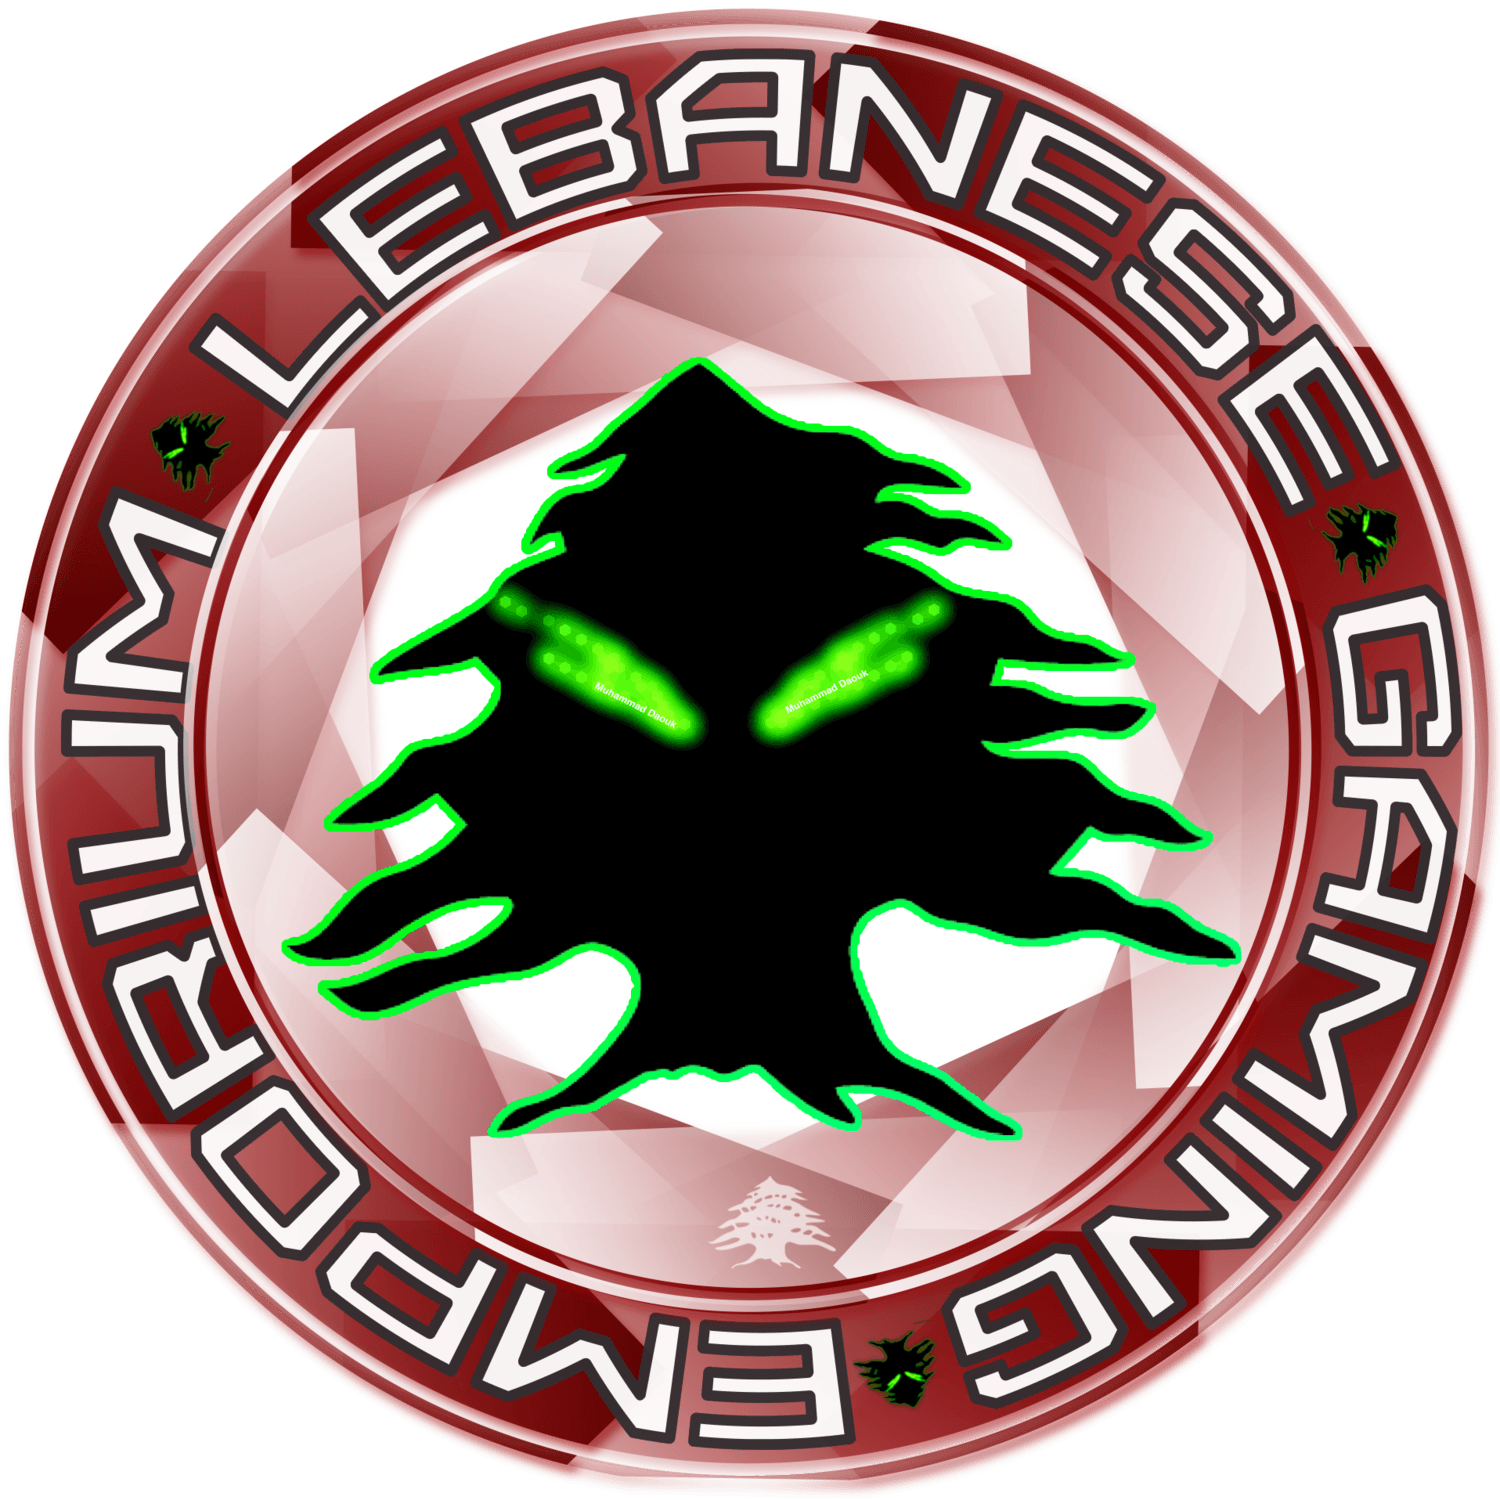 LGE Logo - The LGE